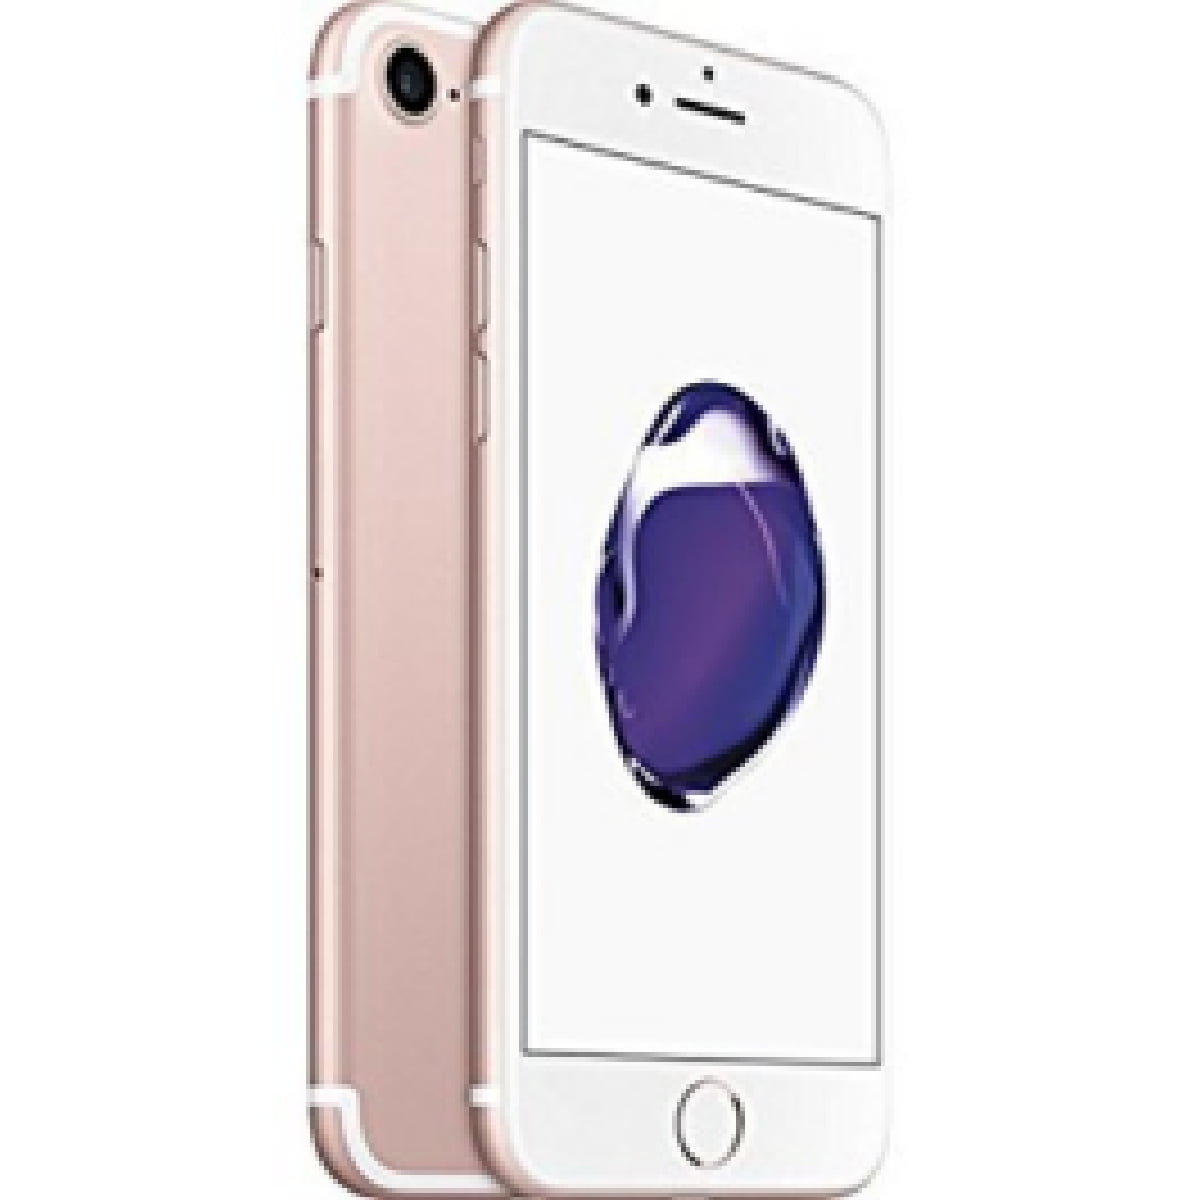 Apple Iphone 7 T Mobile 128gb Rose Gold A1778 Walmart Com